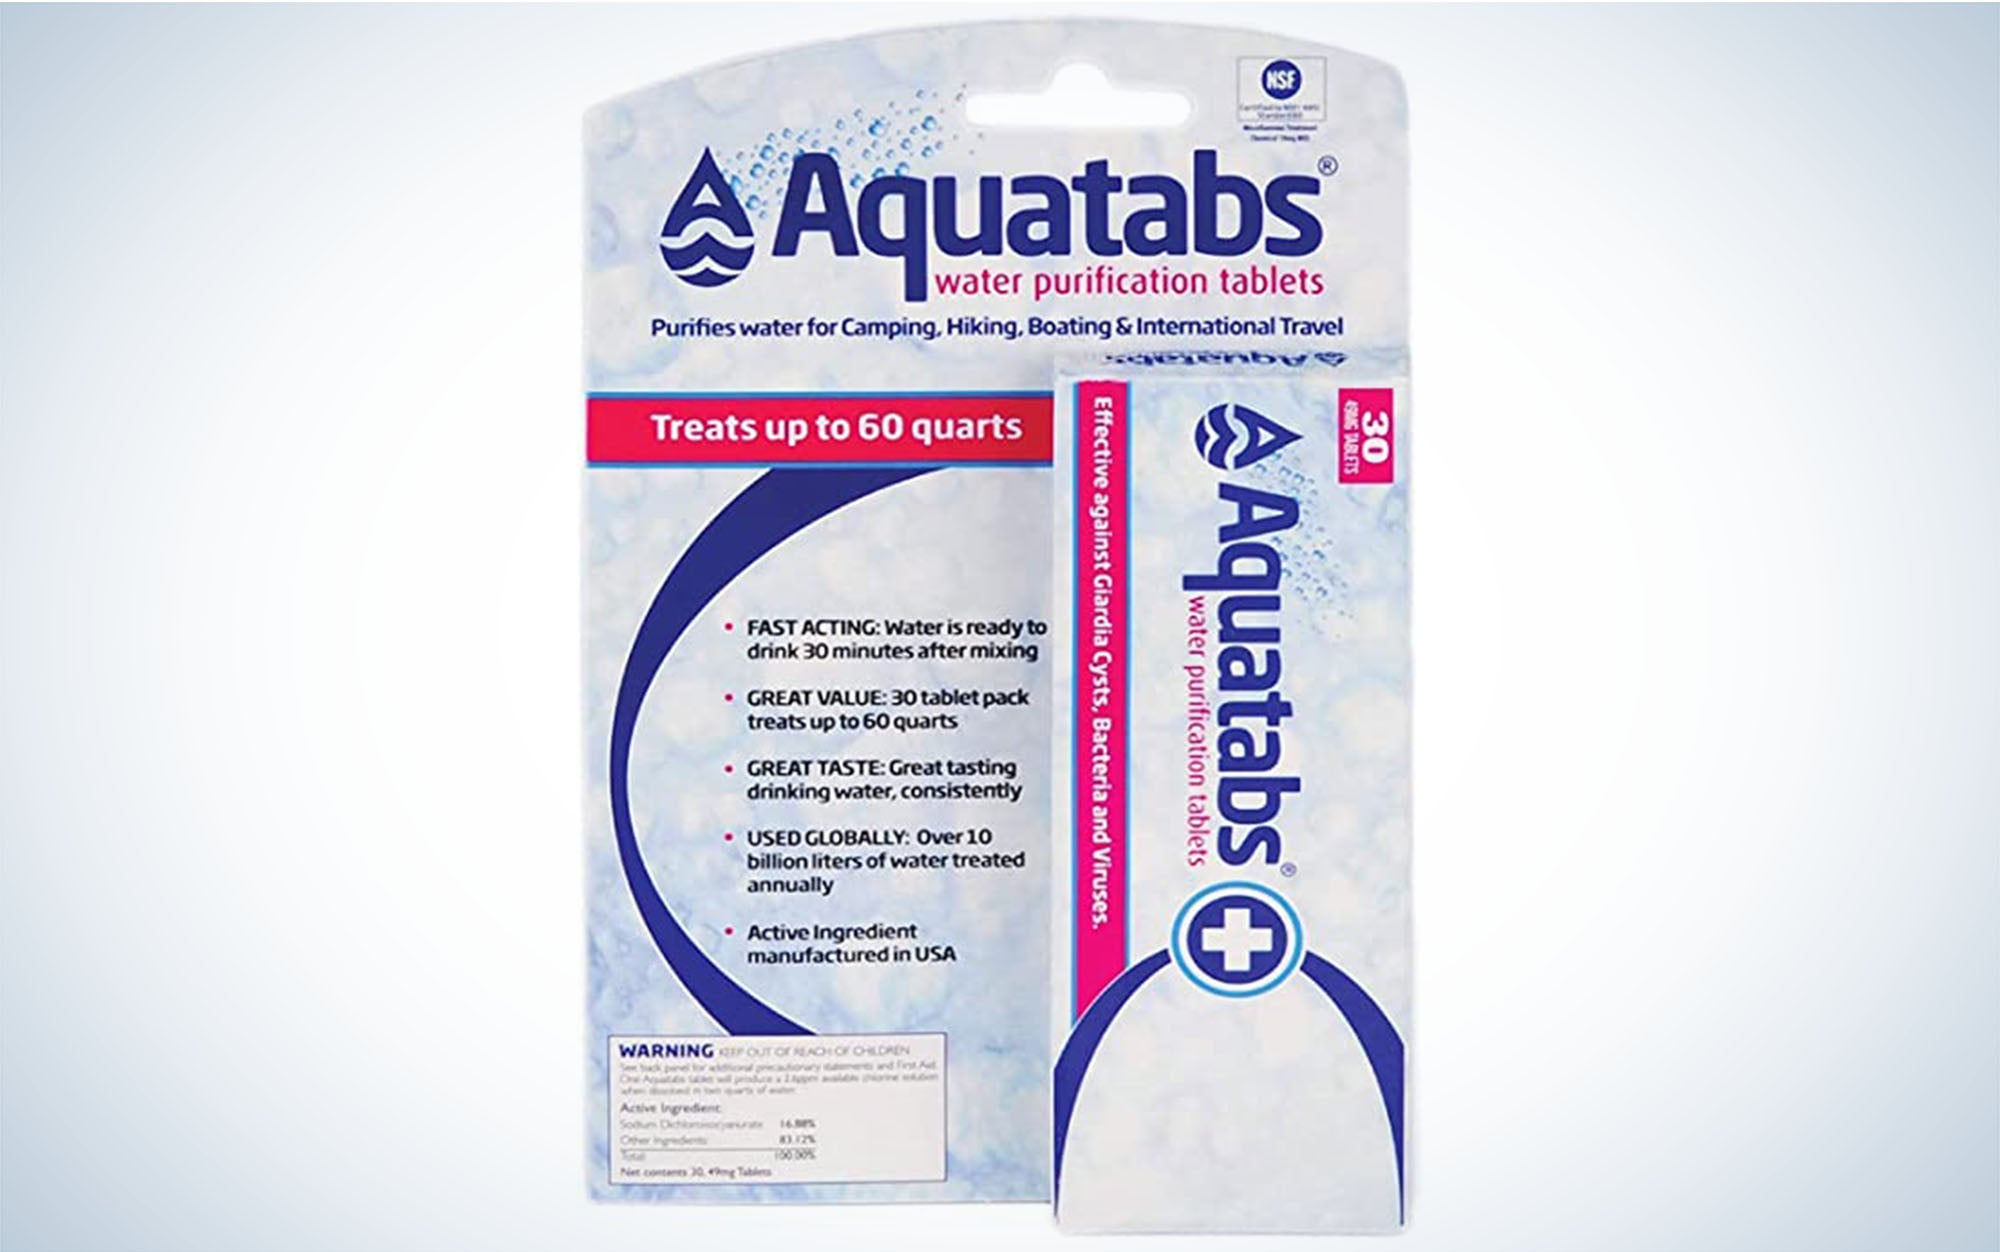 We tested Aquatabs.